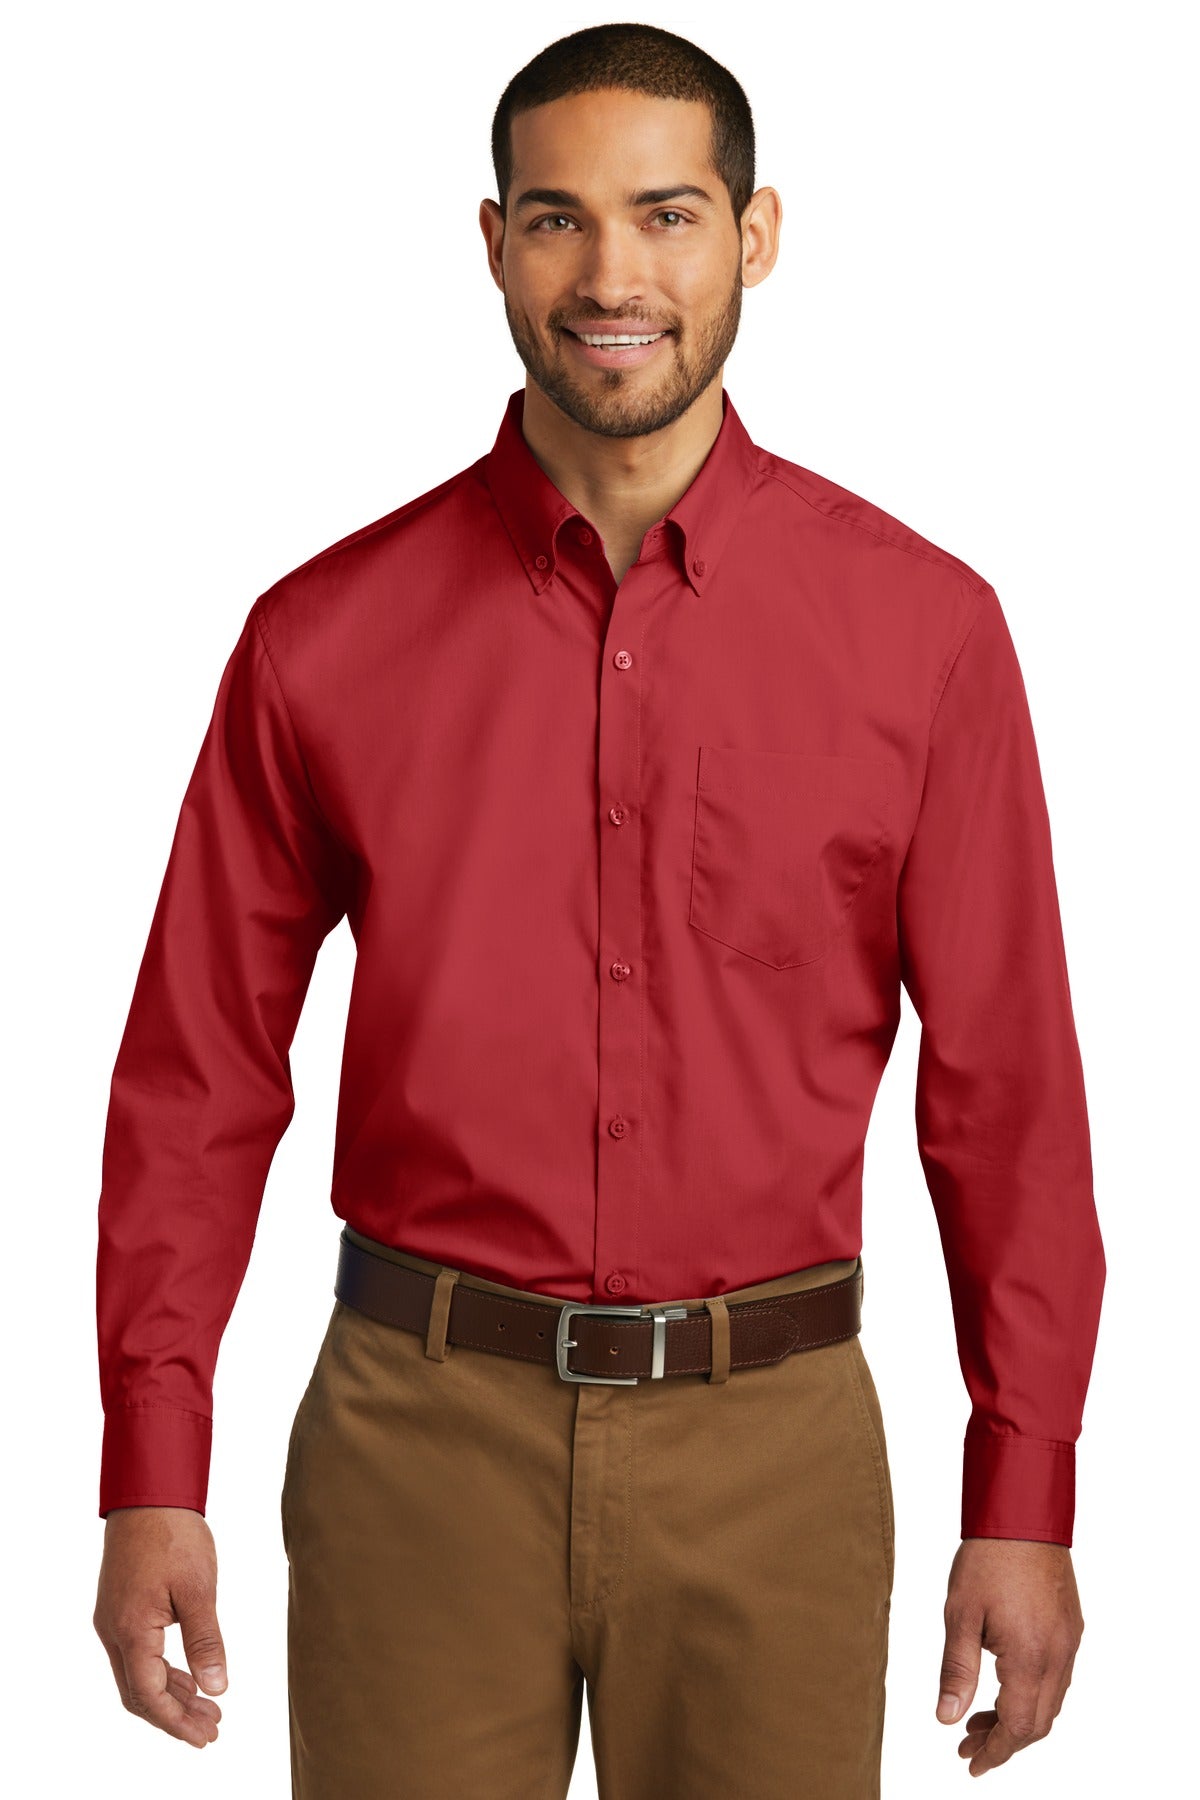 Port Authority® Long Sleeve Carefree Poplin Shirt. W100 [Rich Red] - DFW Impression